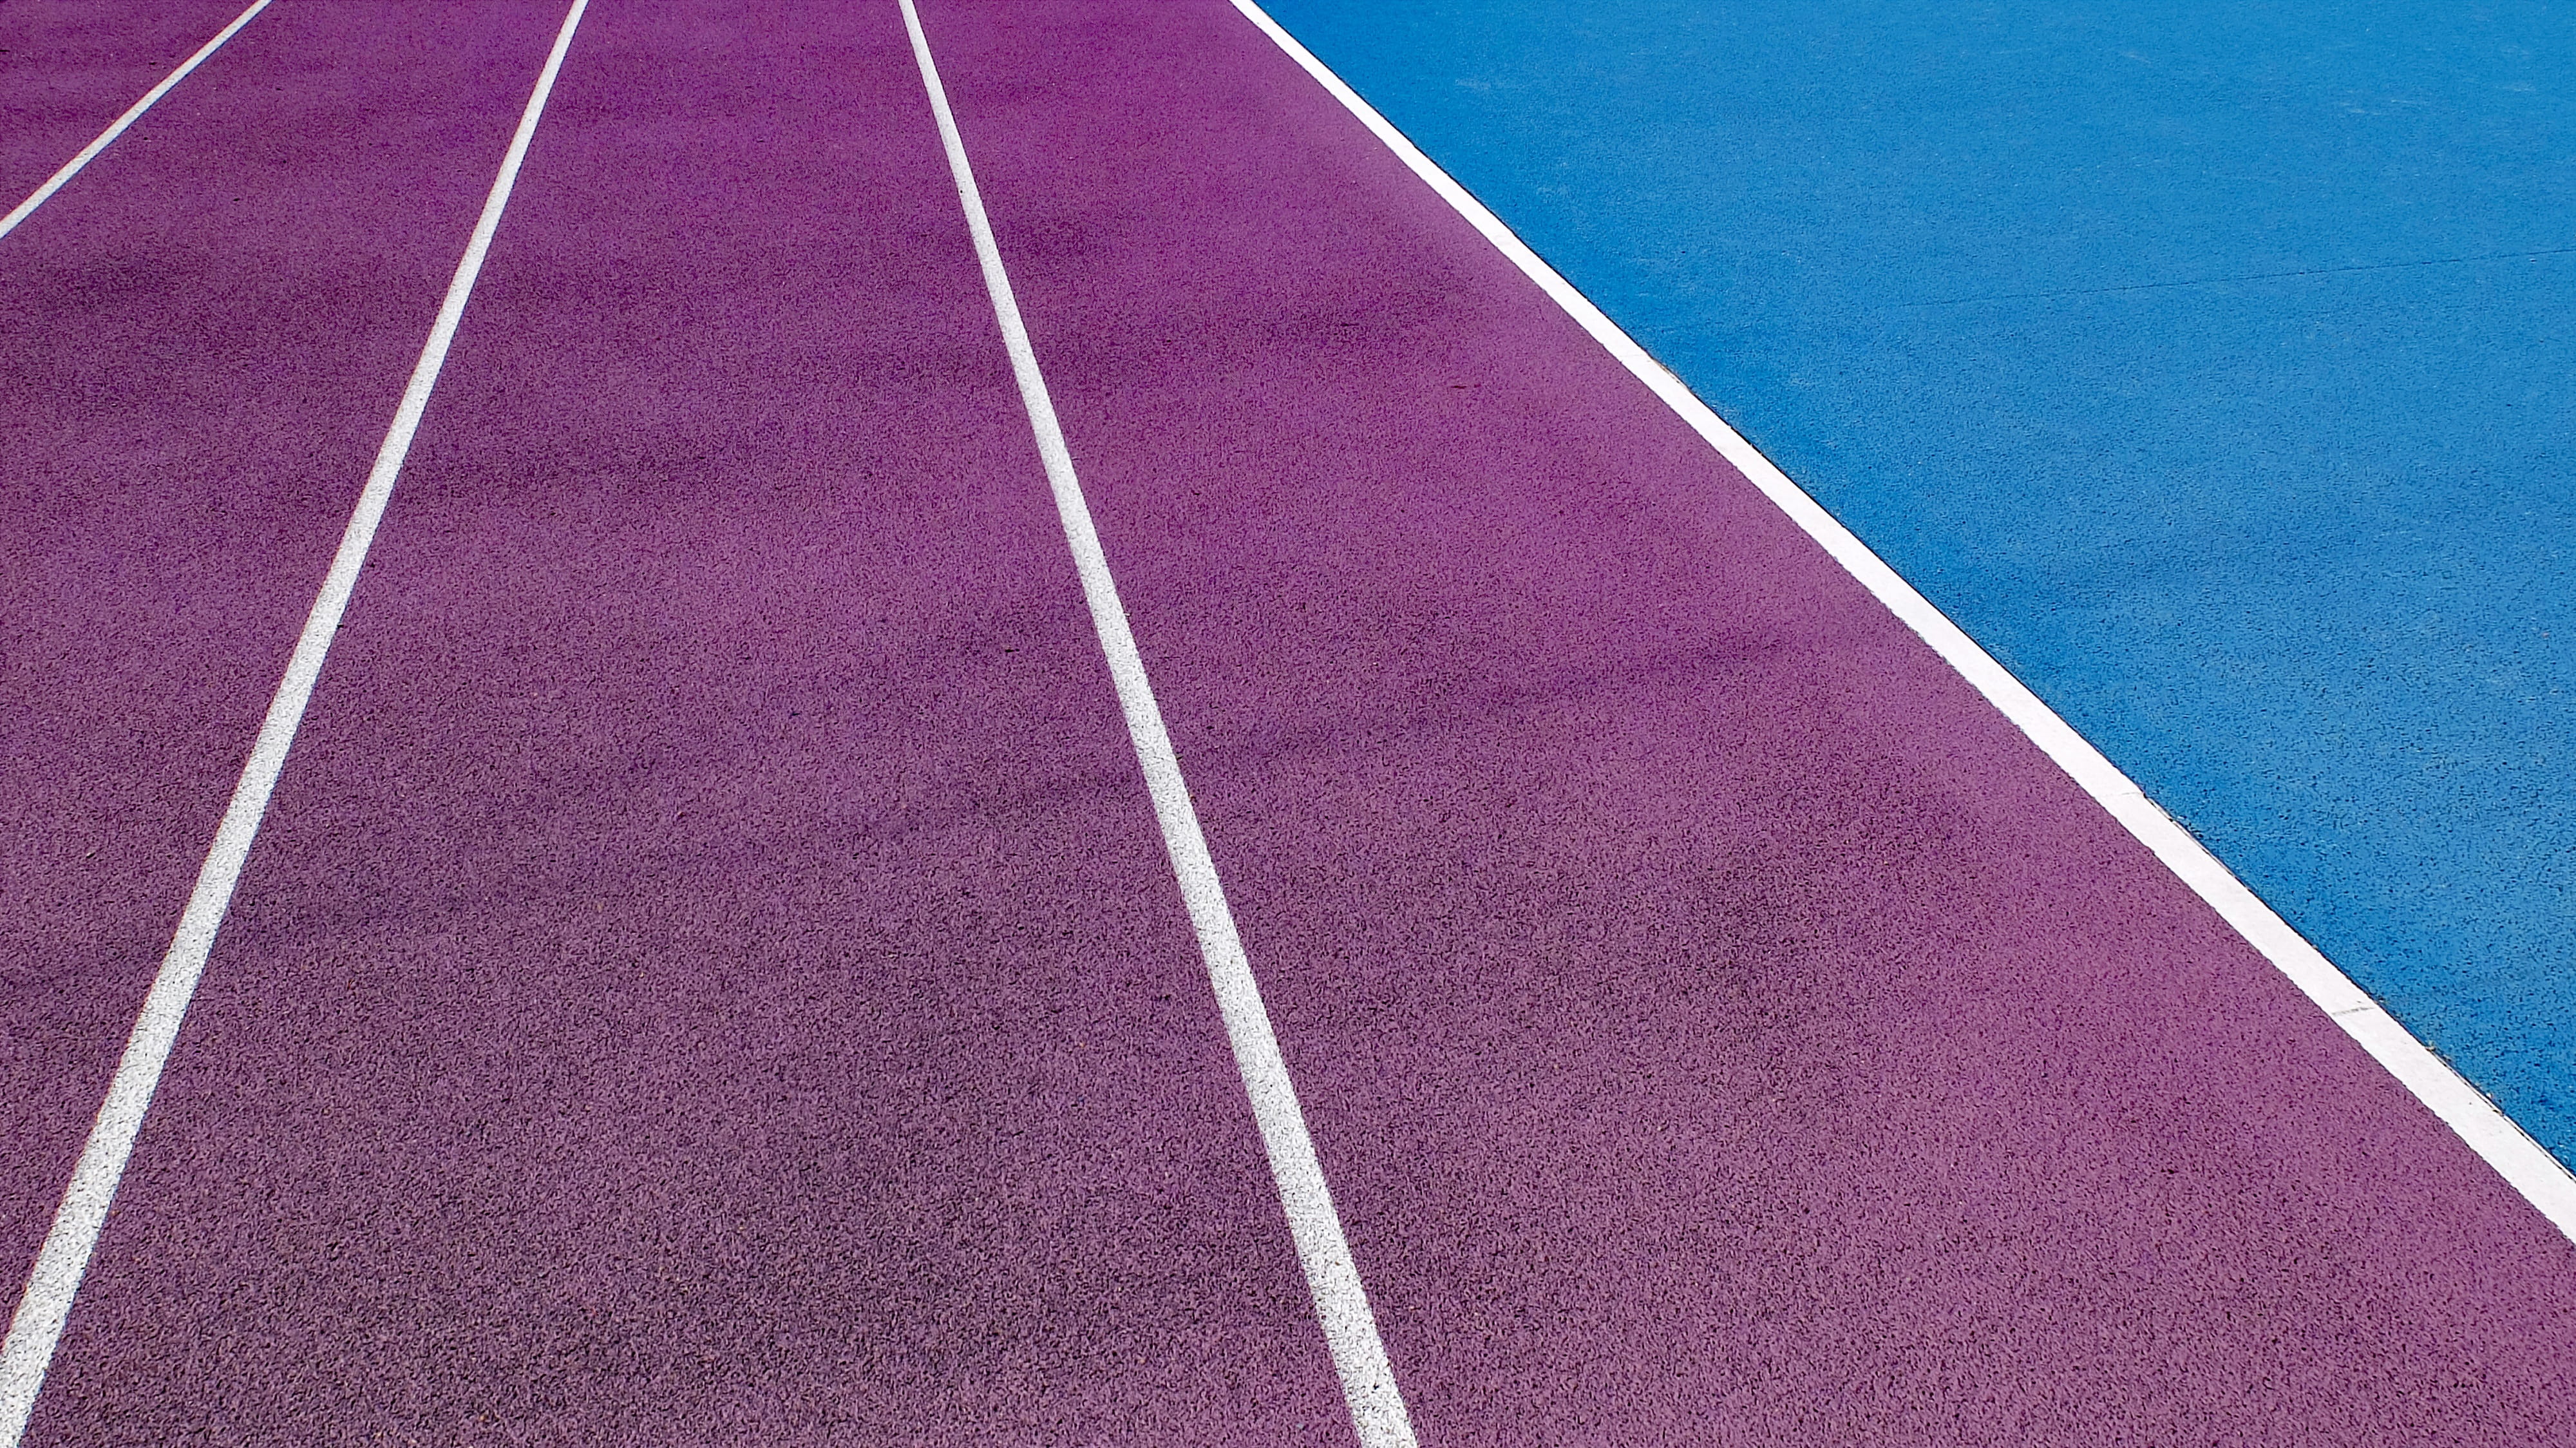 purple and blue rug, sport, racing track, stadium, running, trail